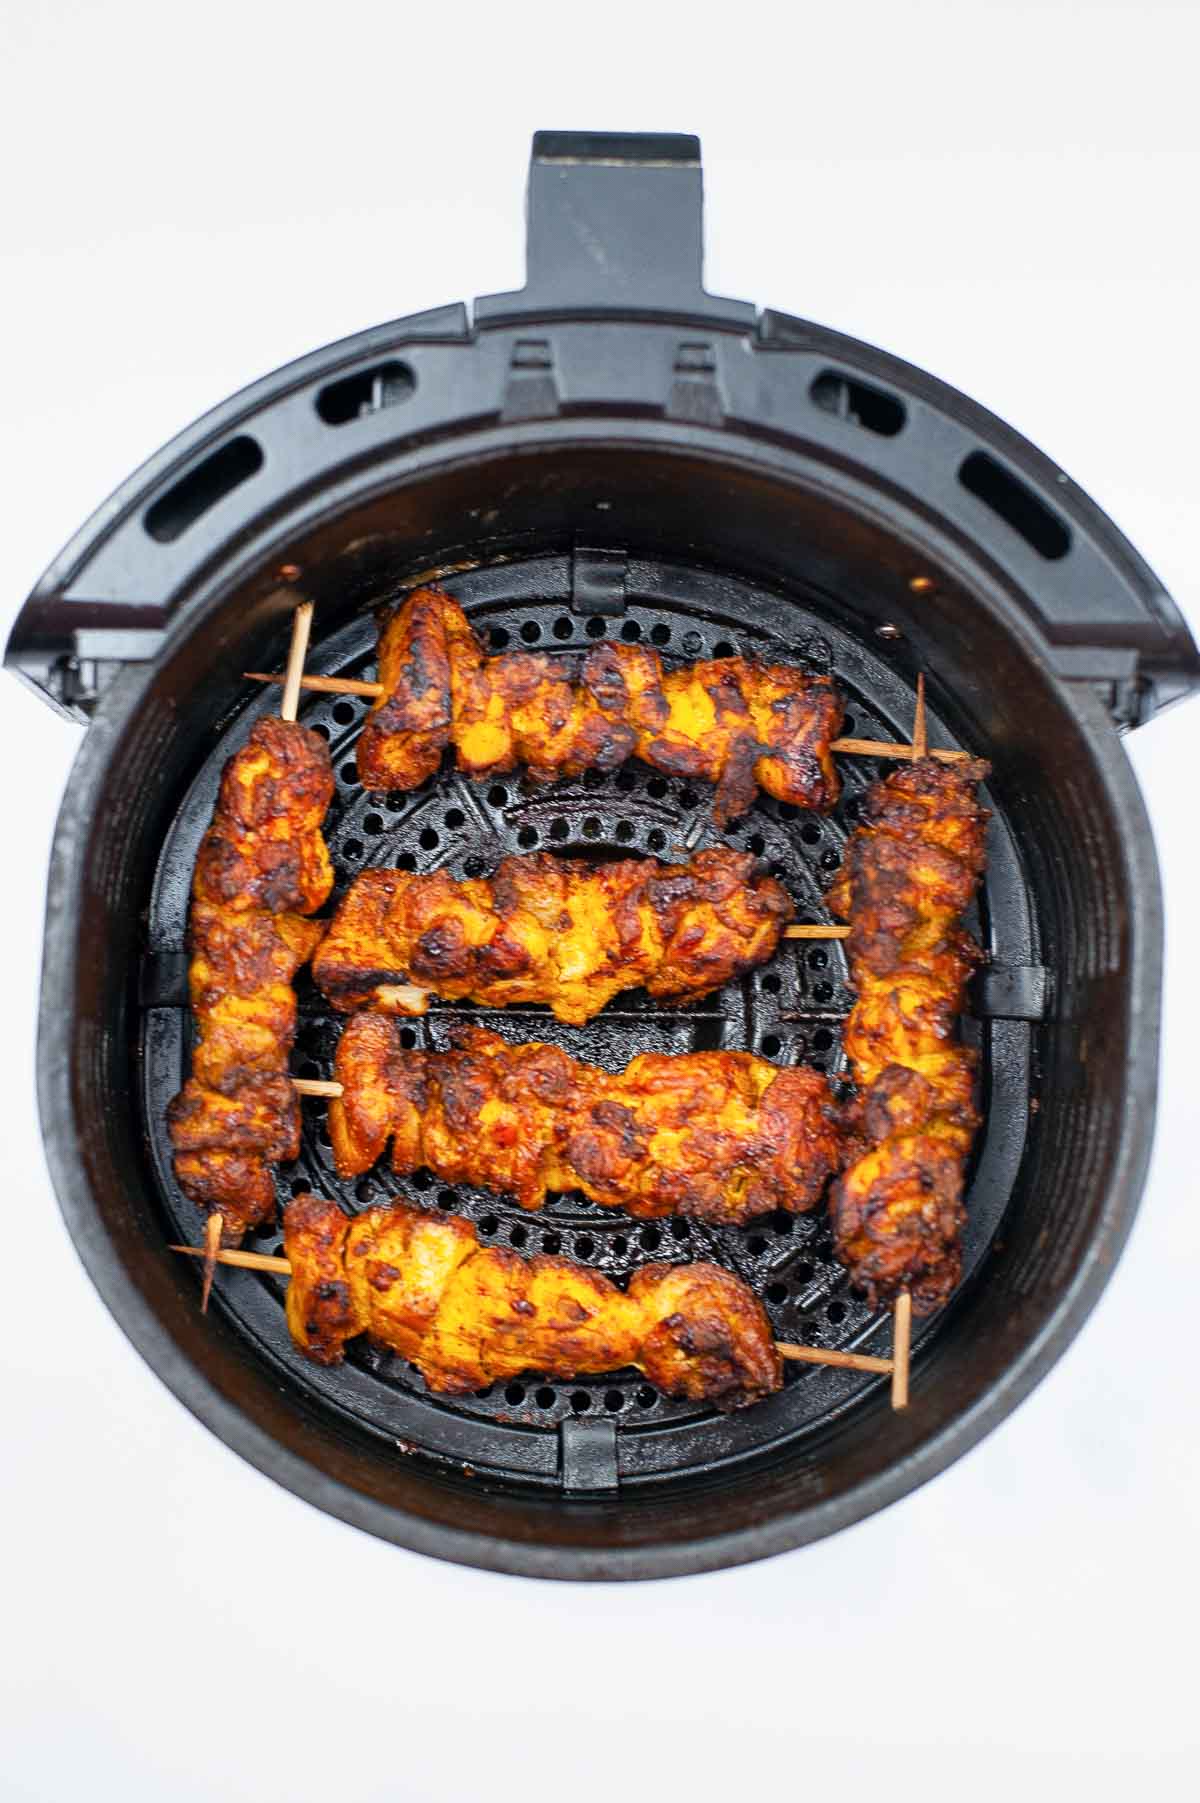 Cooked tandoori chicken kebabs in an air fryer.